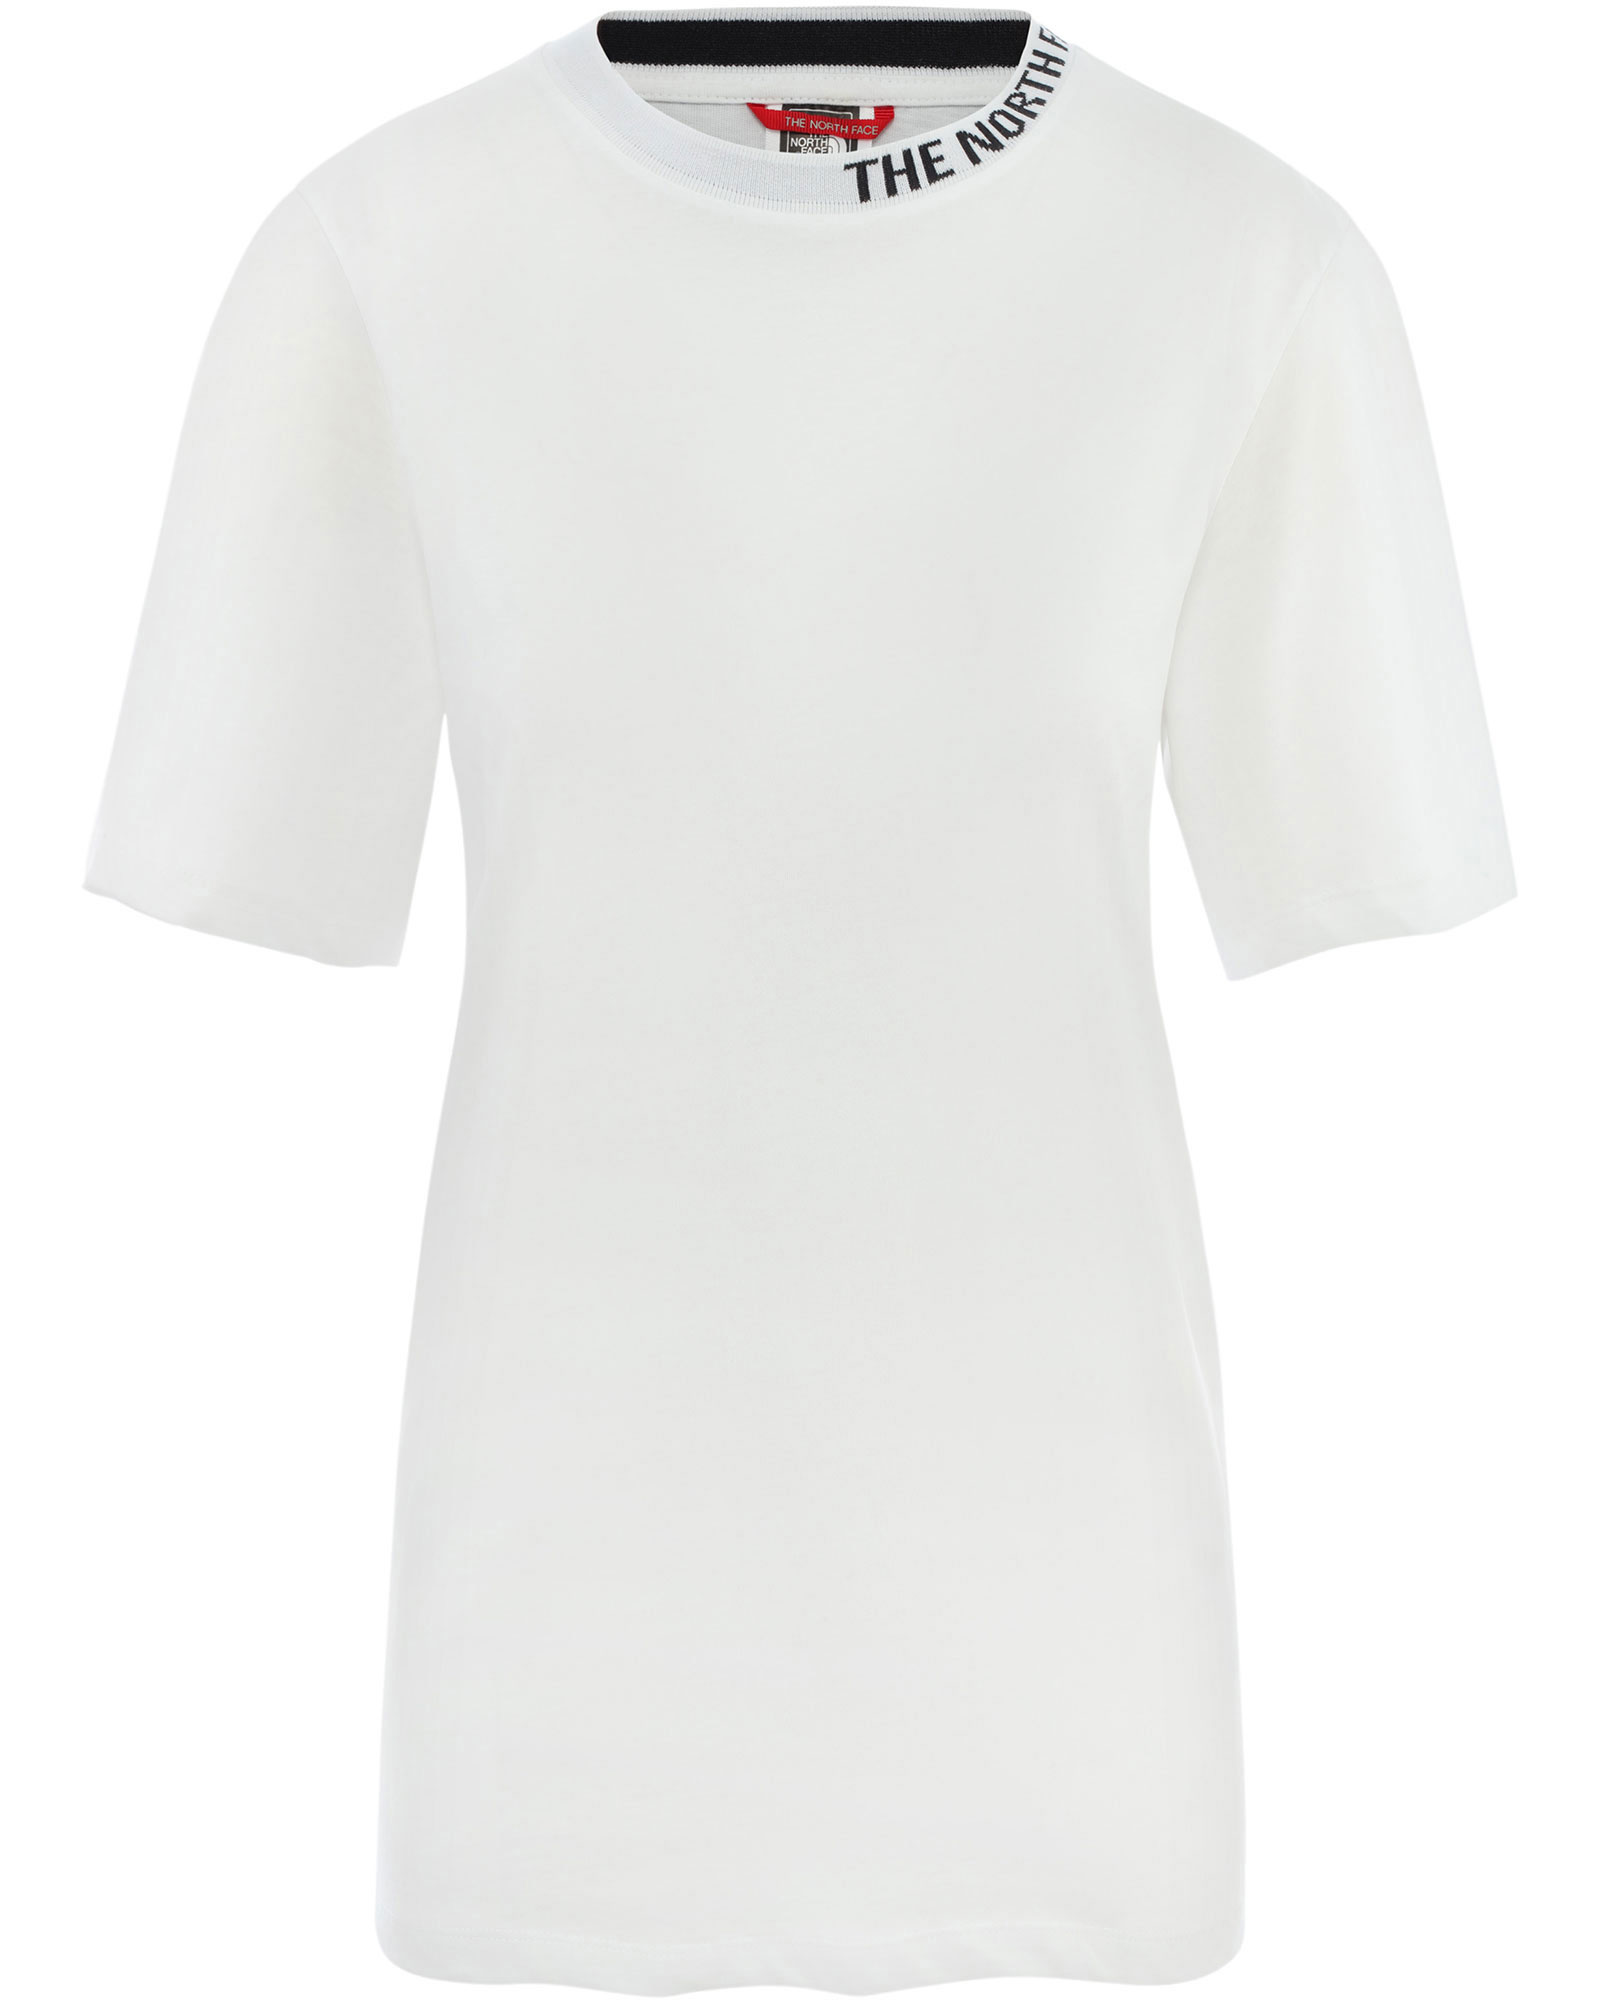 The North Face Zumu Women’s T Shirt - TNF White L